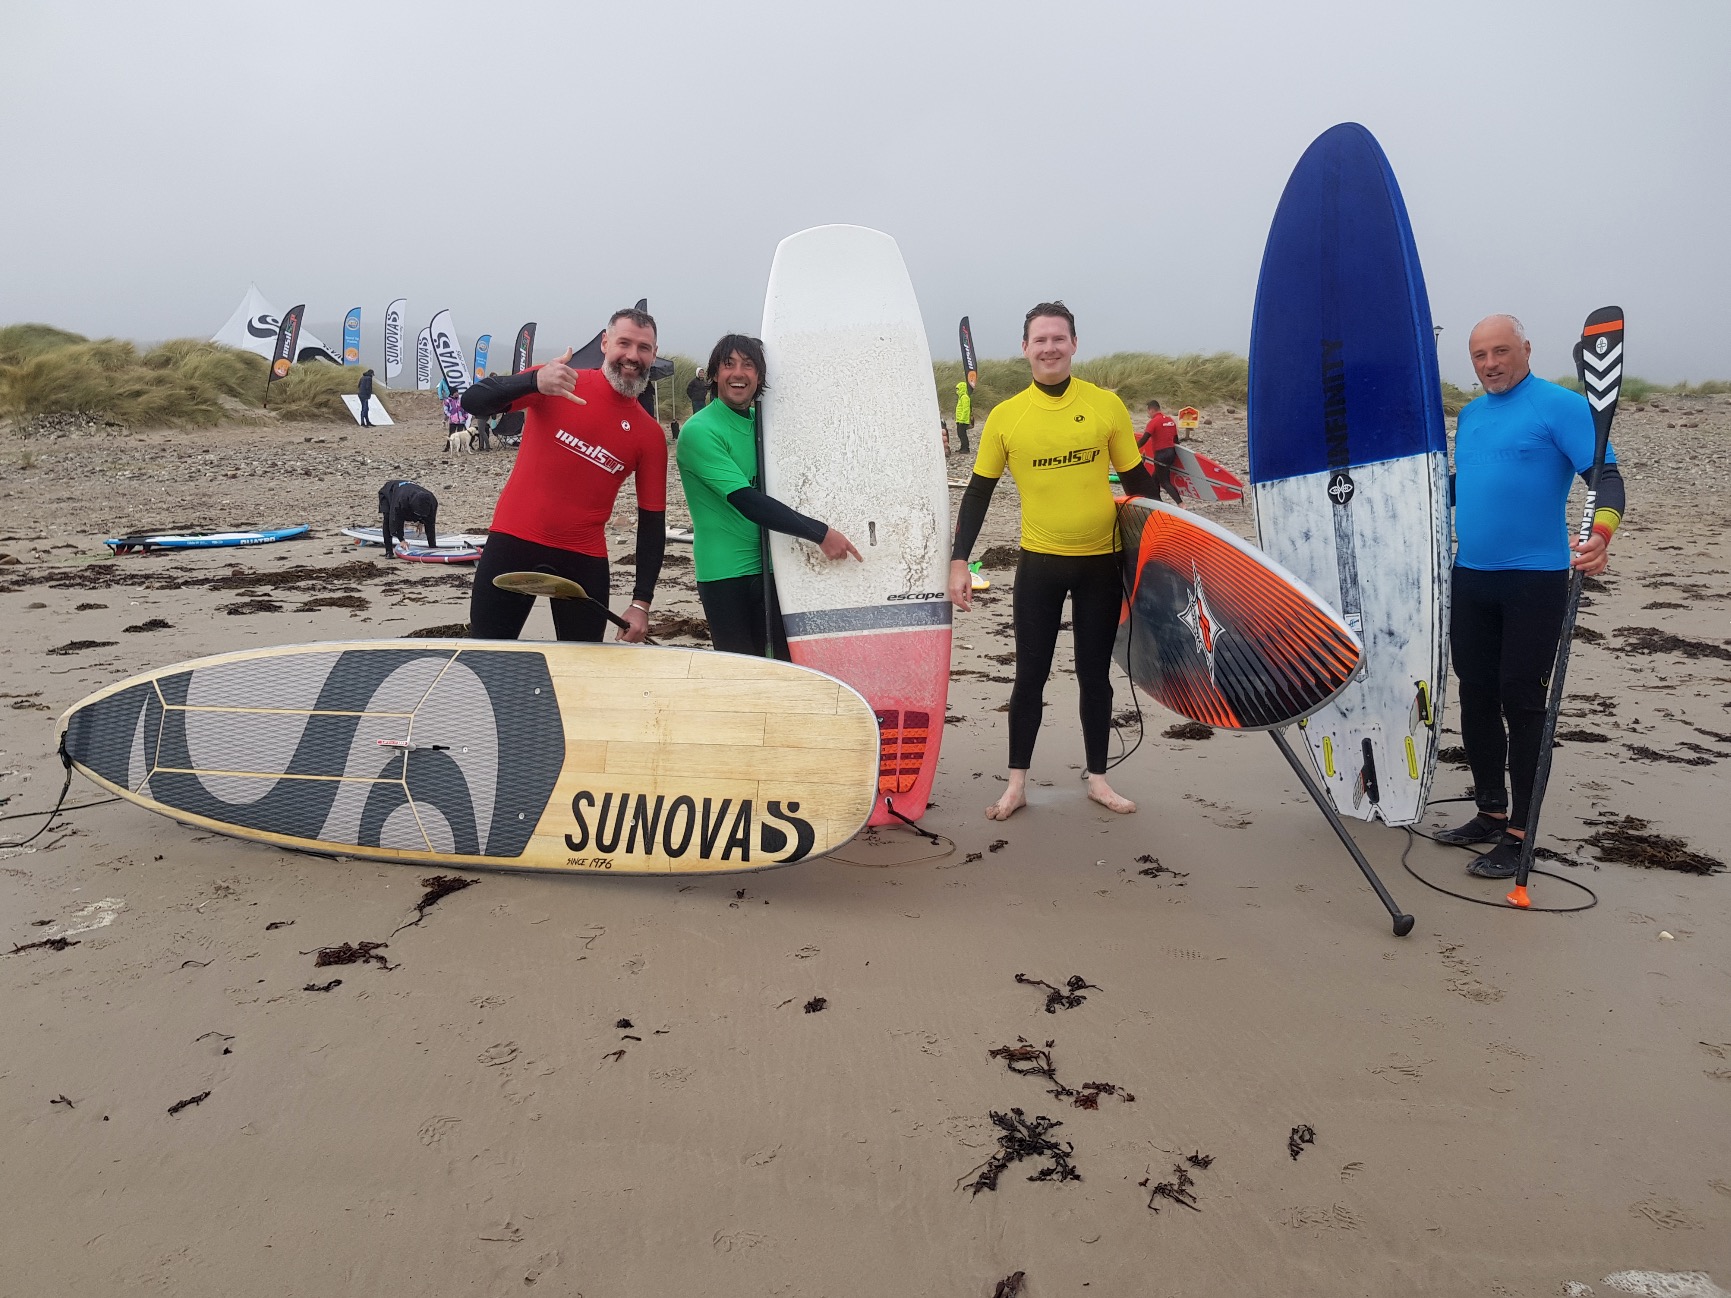 IrishSUP Surf Classic 2019